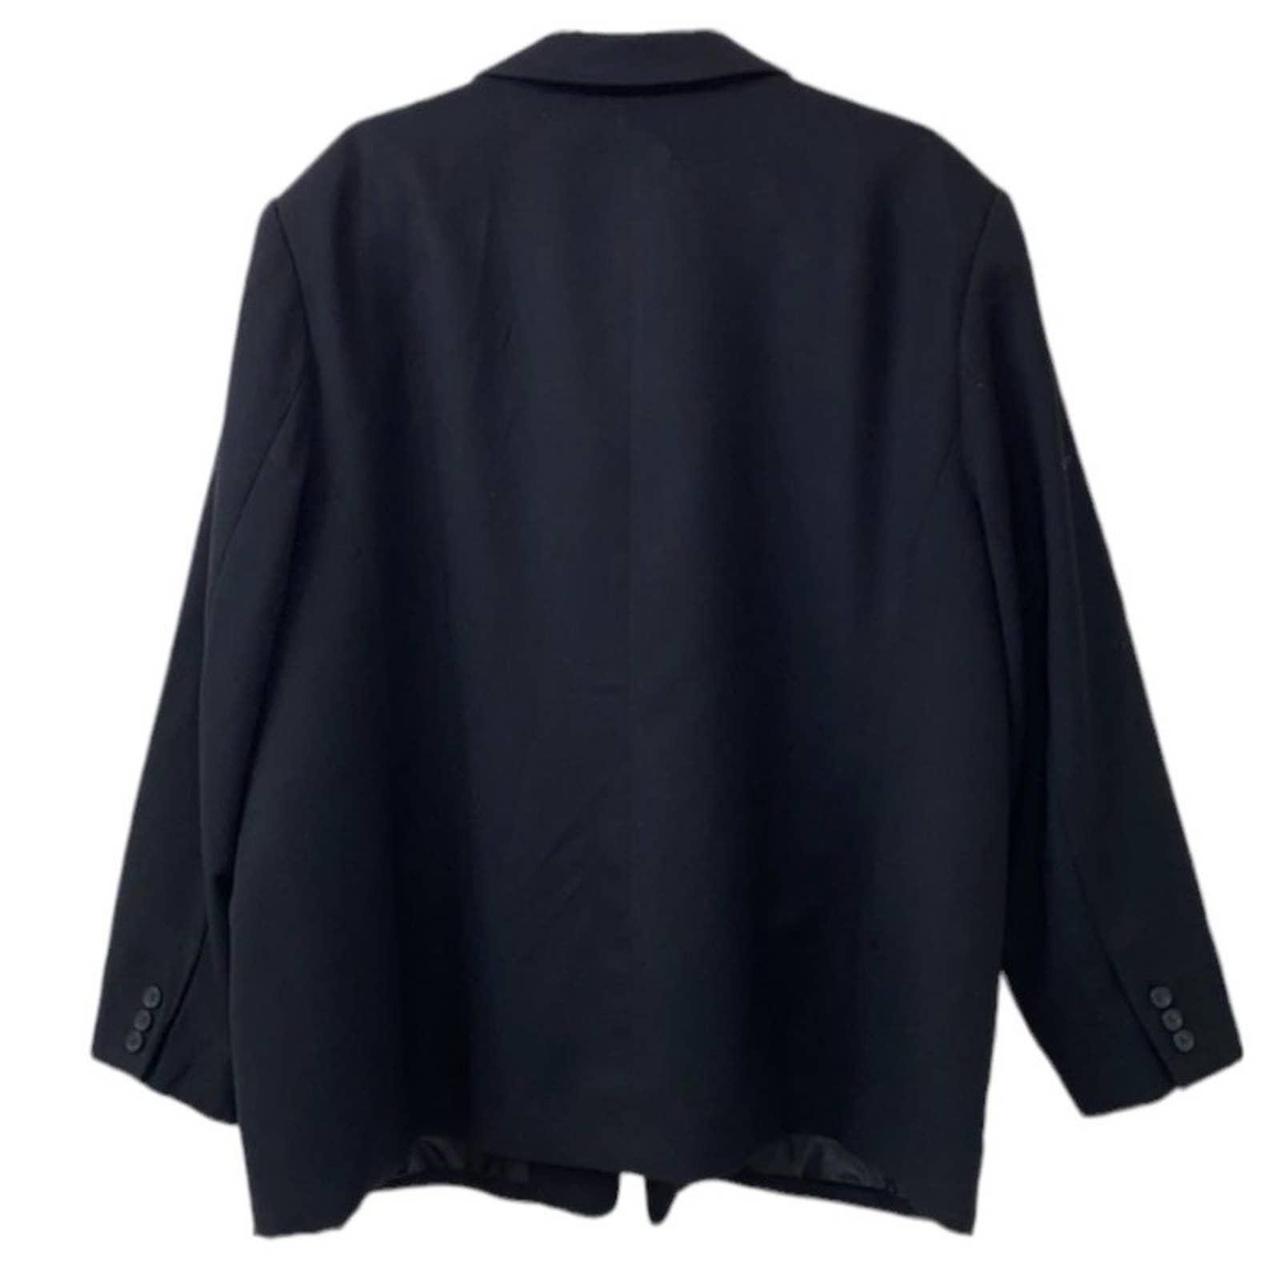 Pendleton Women's Black Jacket (2)